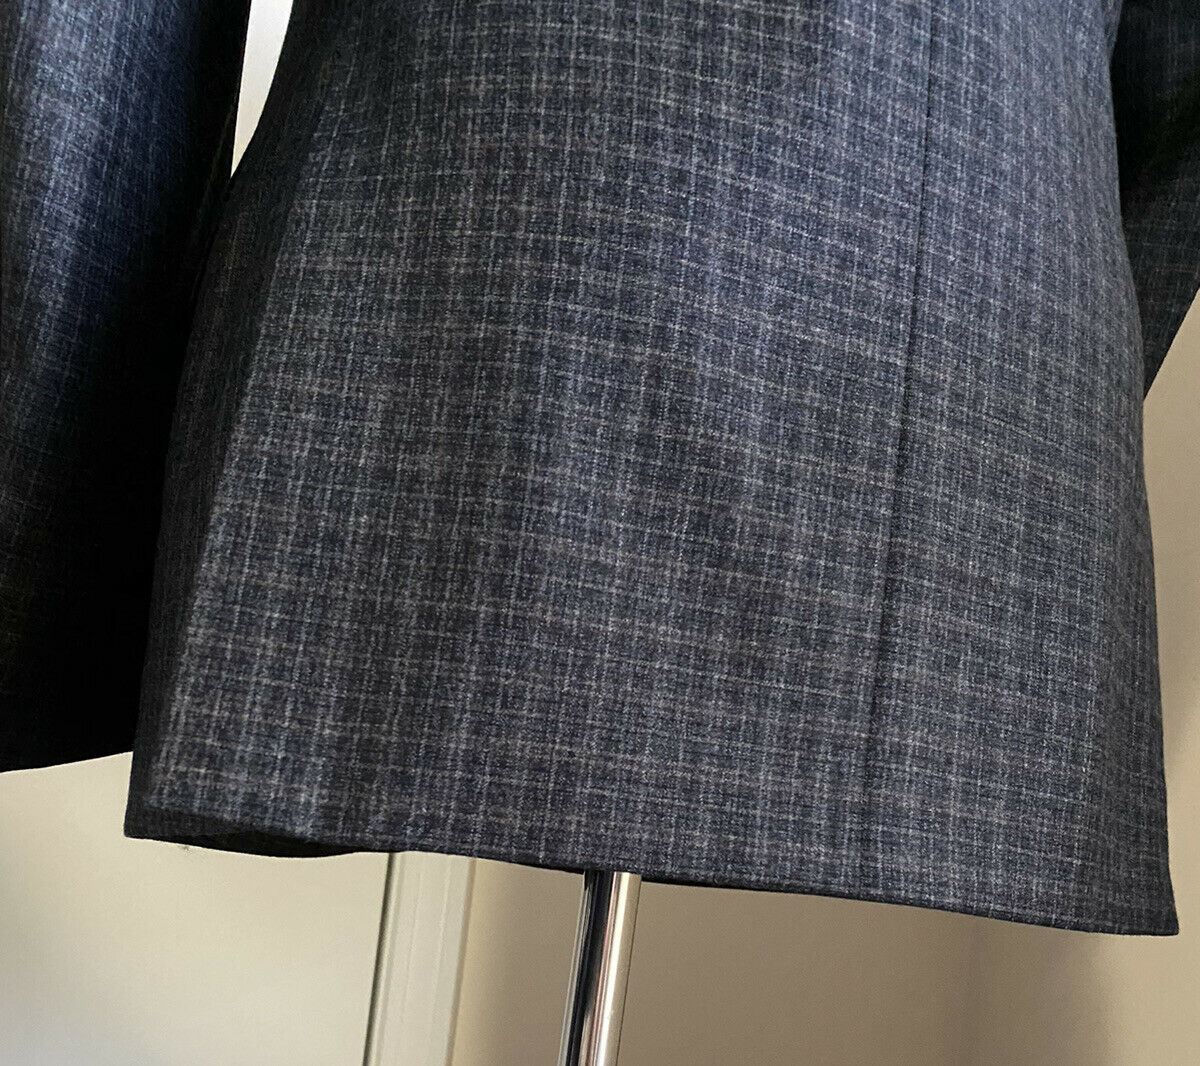 Neuer 4500 $ Giorgio Armani Herrenanzug aus weicher Wolle DK Grau CK 42R US (52R Eu) Italien